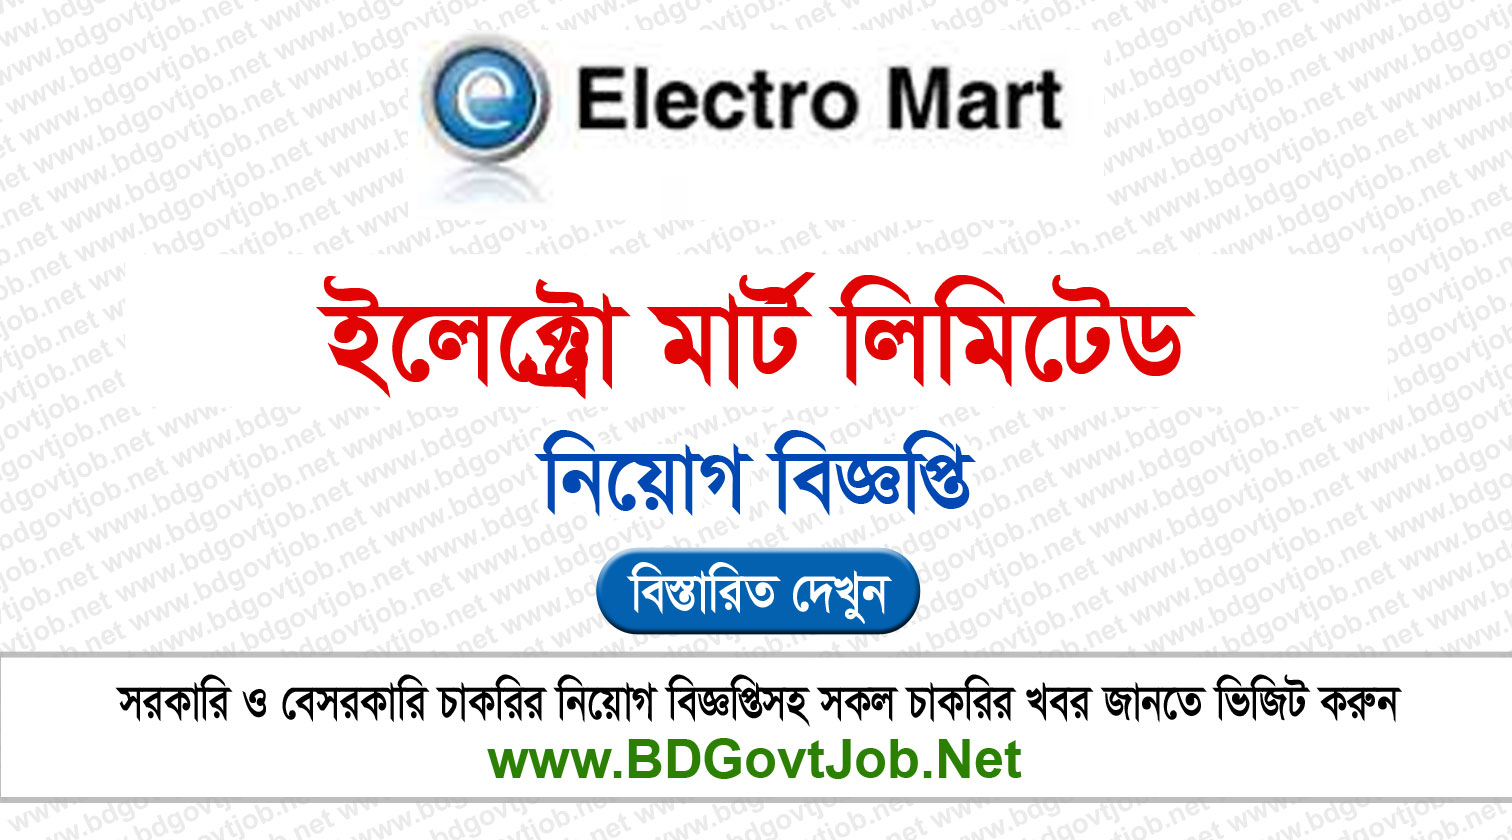 Electro Mart Limited Job Circular